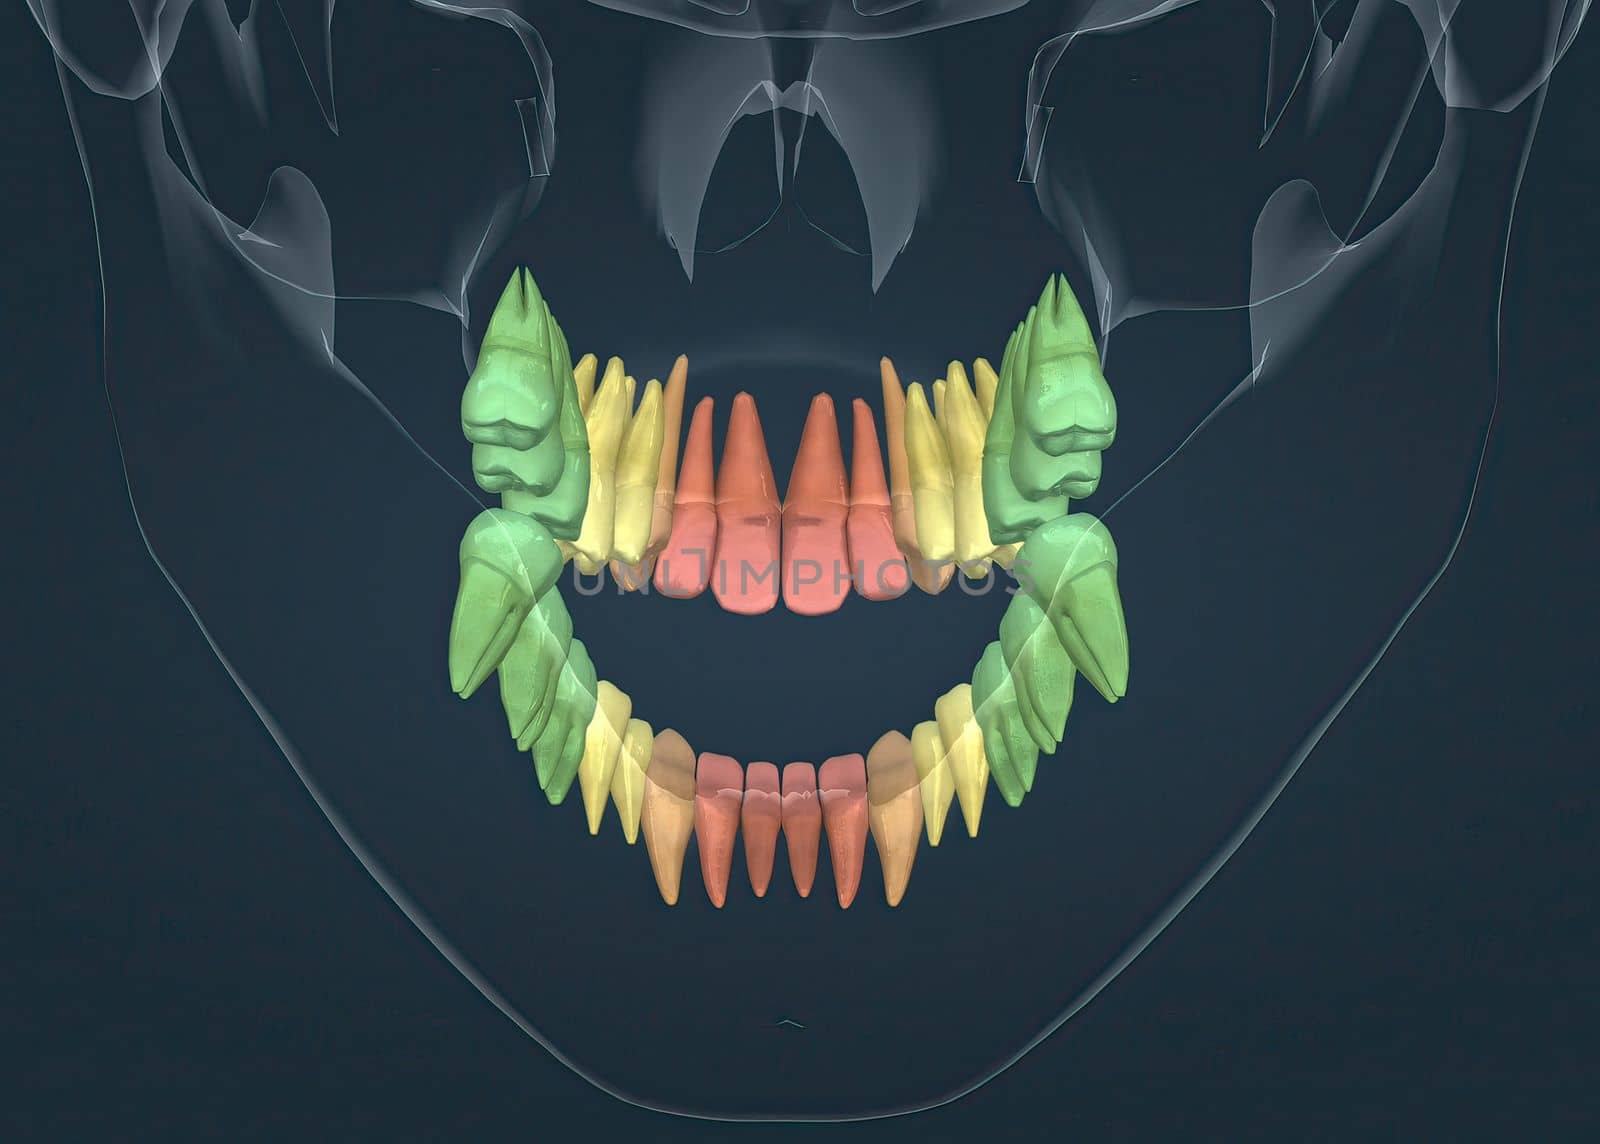 Full anatomy upper and lower teeth 3D illustration